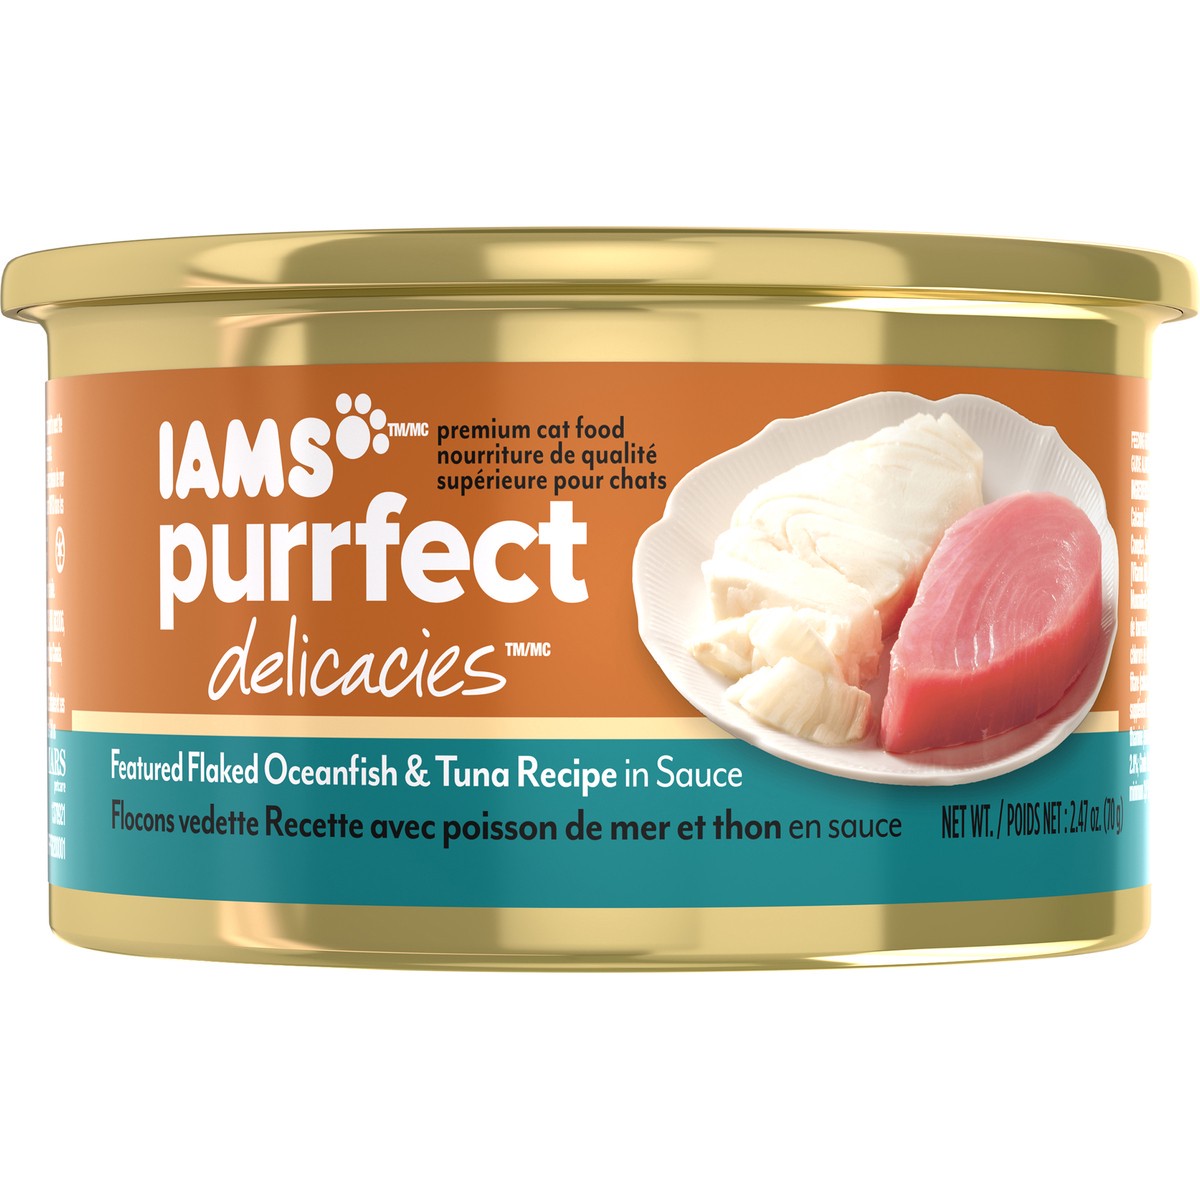 slide 5 of 12, Iams Purrfect Delicacies Premier Flaked Oceanfish & Tuna Recipe in Sauce Premium Cat Food 2.47 oz. Can, 2.47 oz